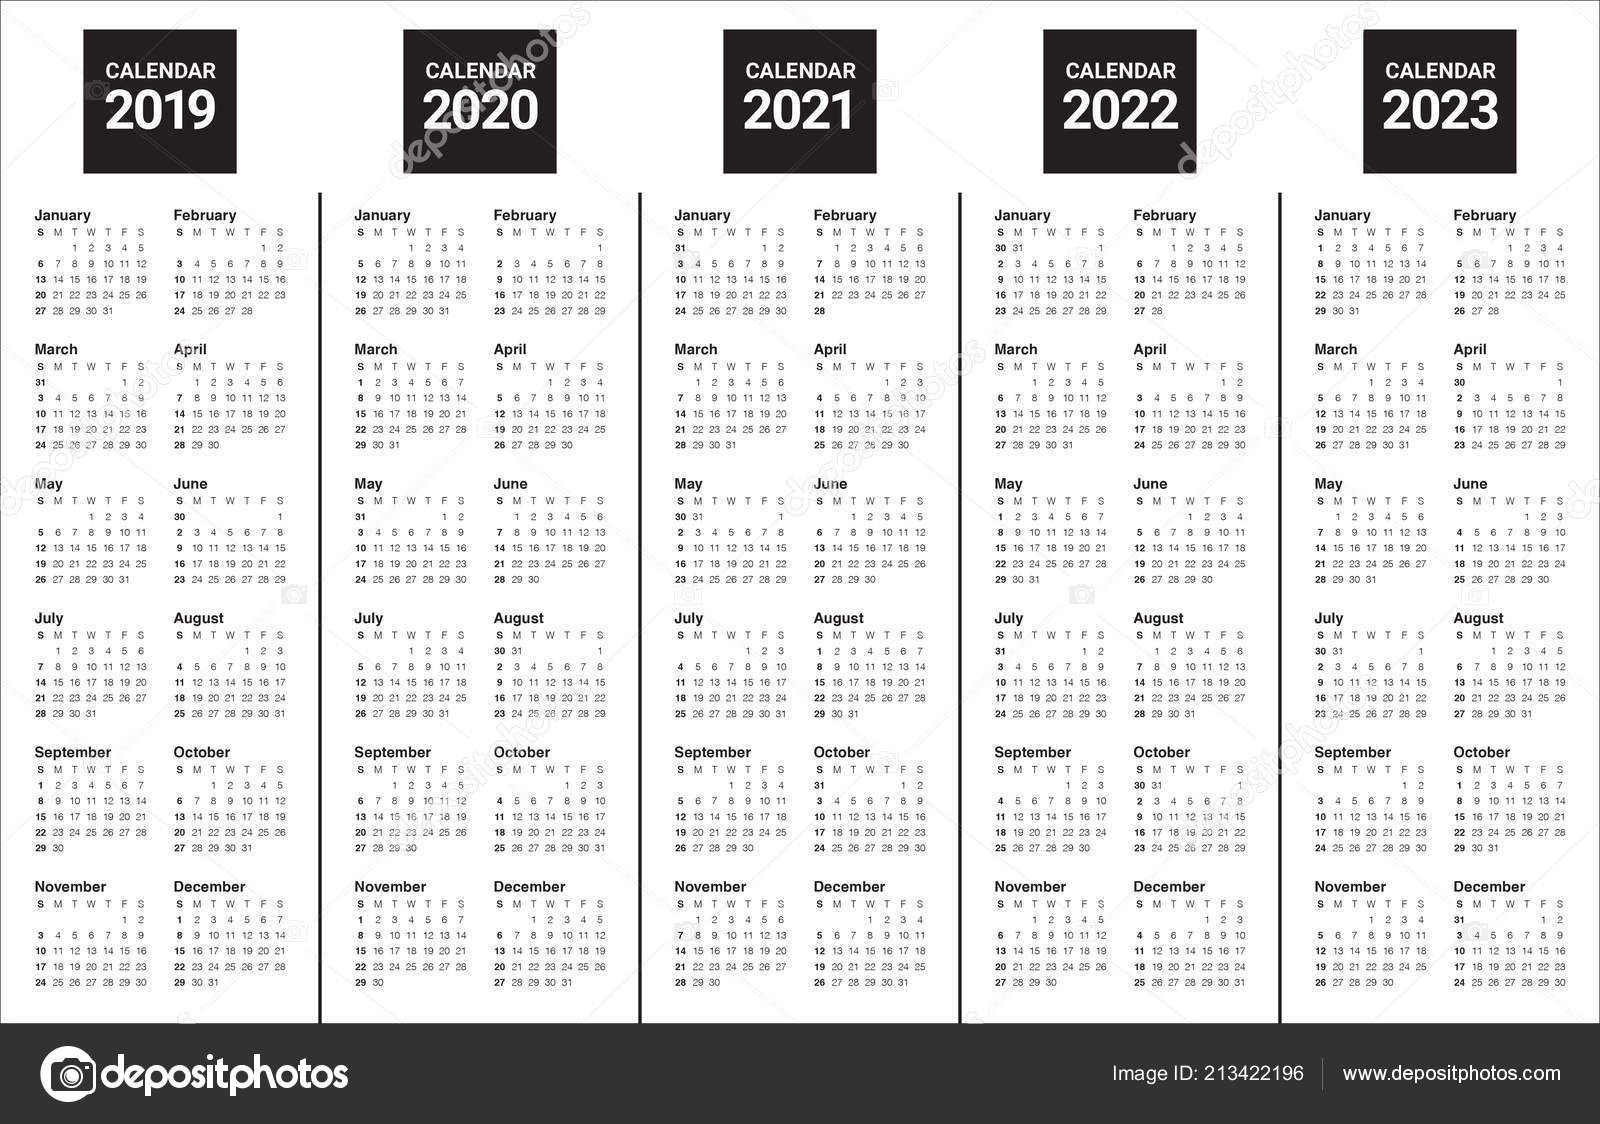 Printable Calendar For 2019/2020/2021/2022/2023 In 2020 intended for 2019 2020 2021 2022 2023 Year Calendar Printable